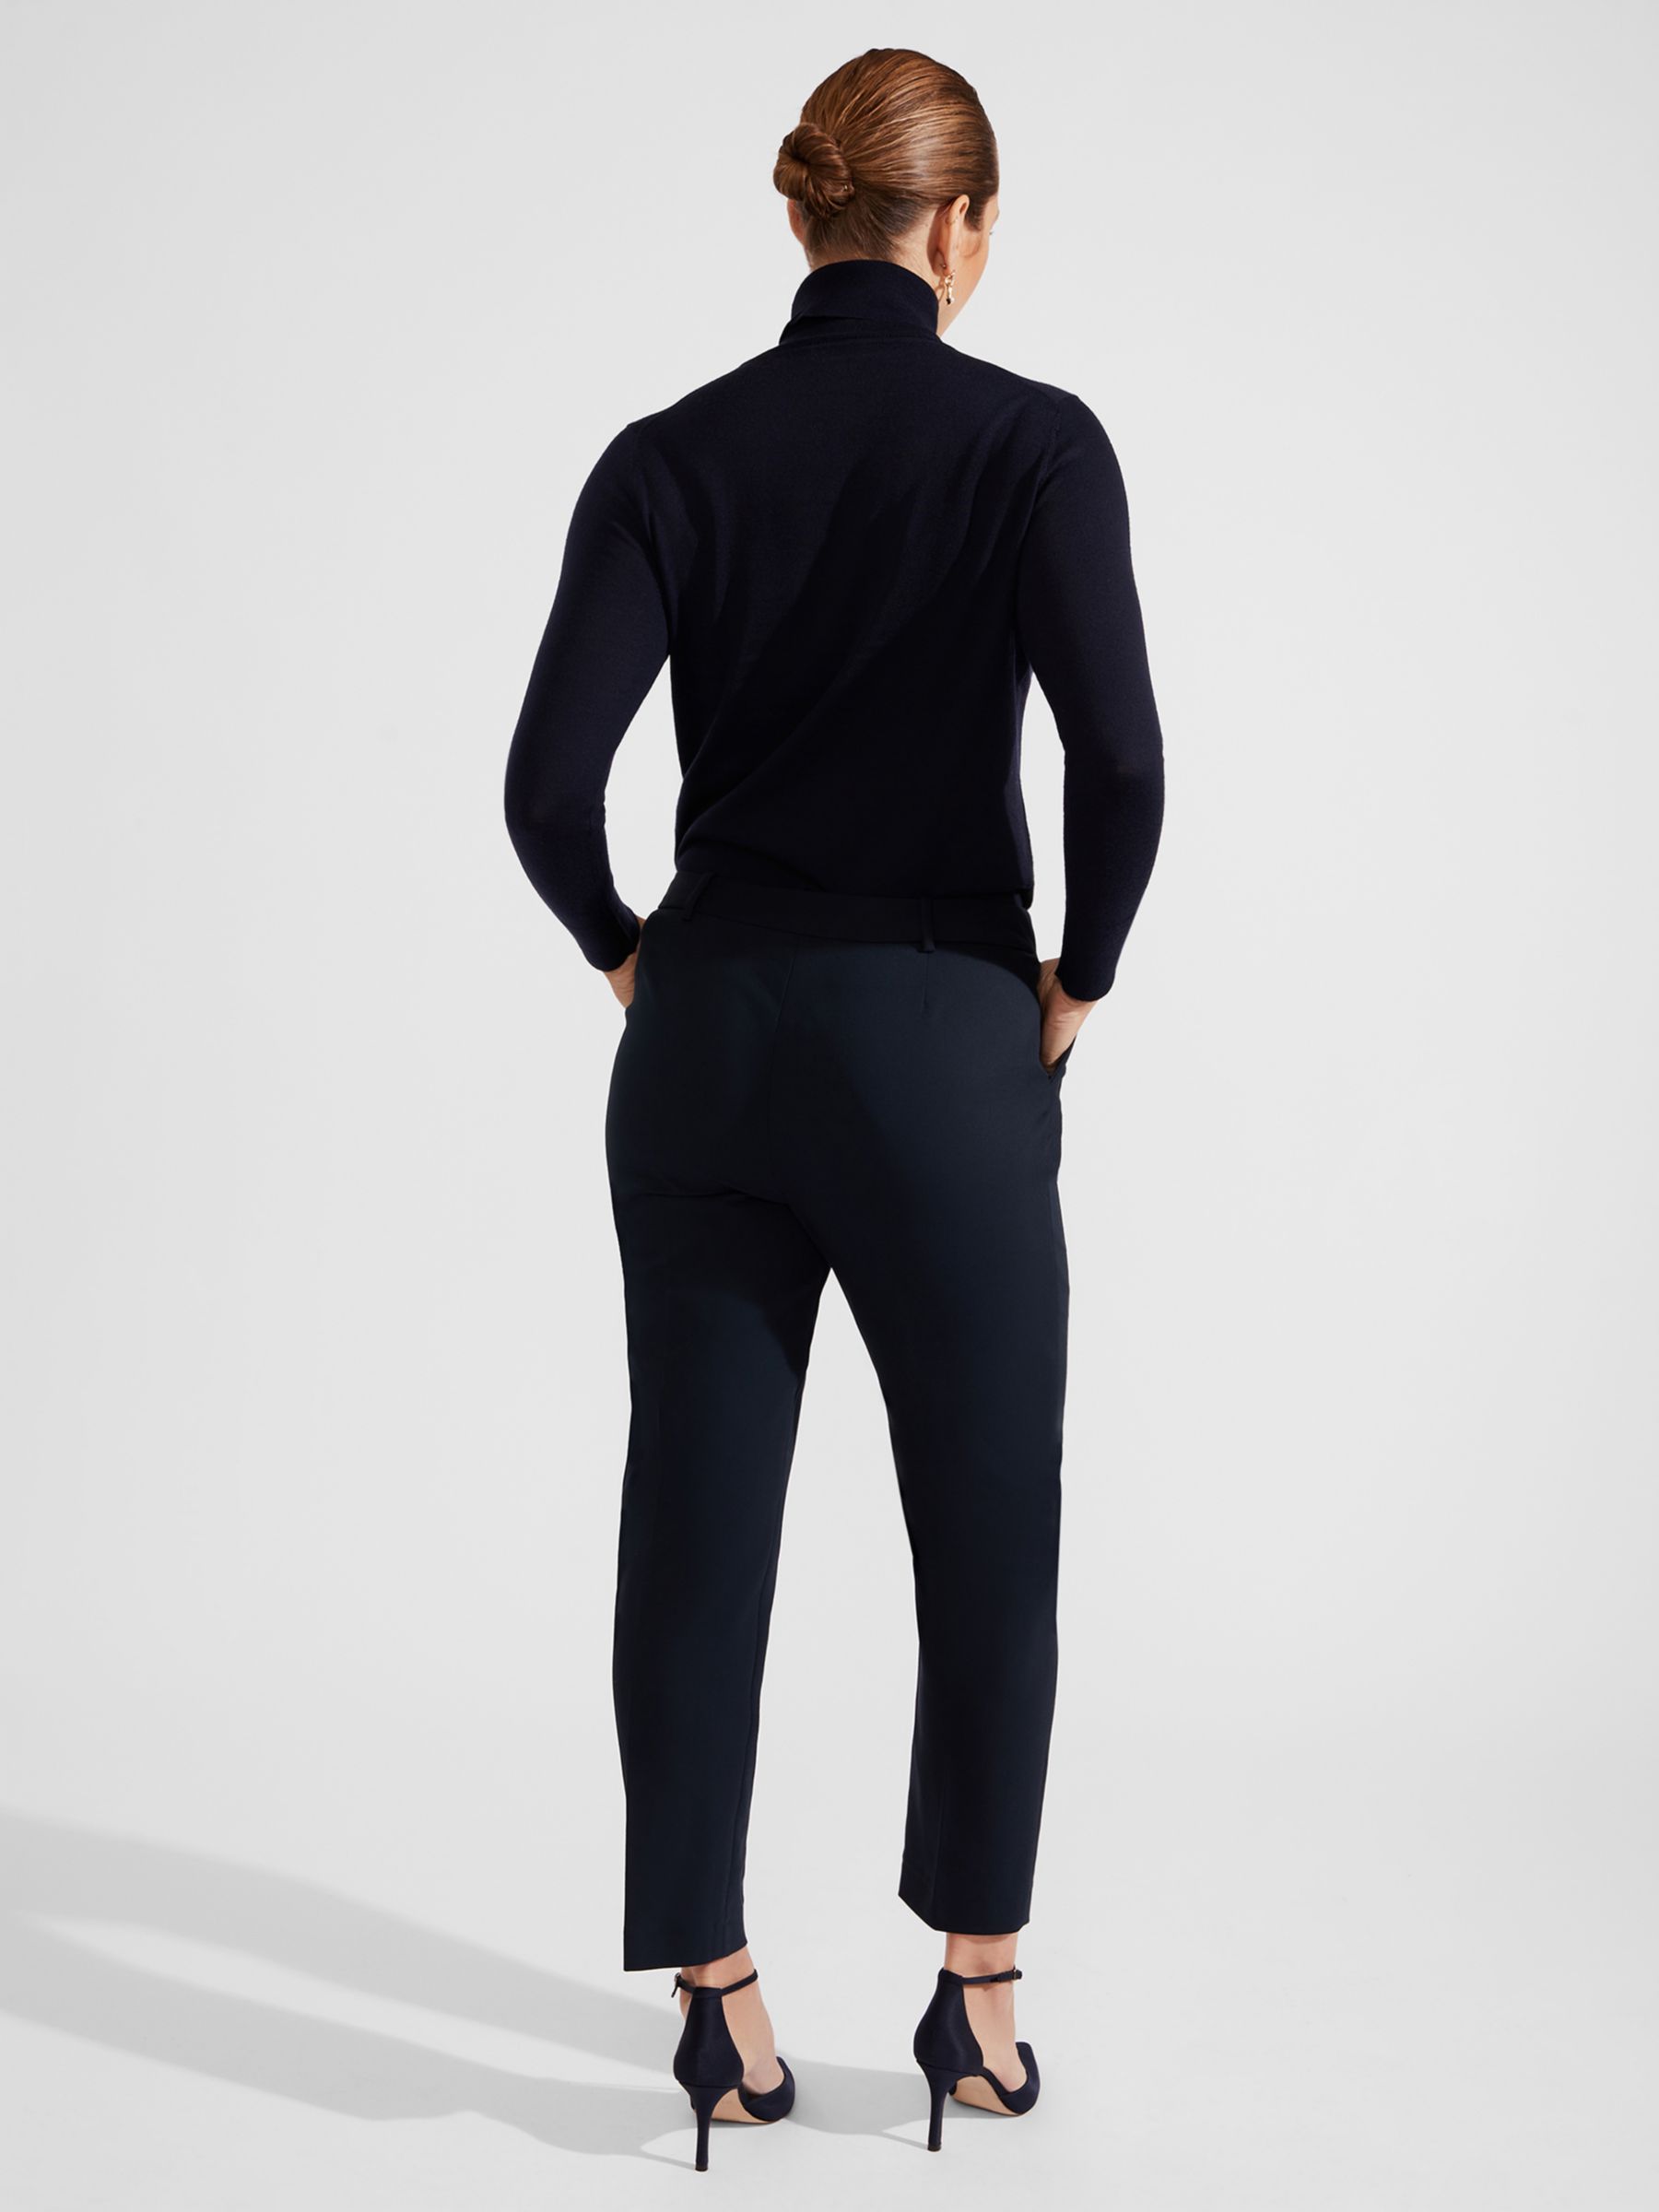 Petite Trousers For Women, Skinny, Tapered & More, Hobbs London